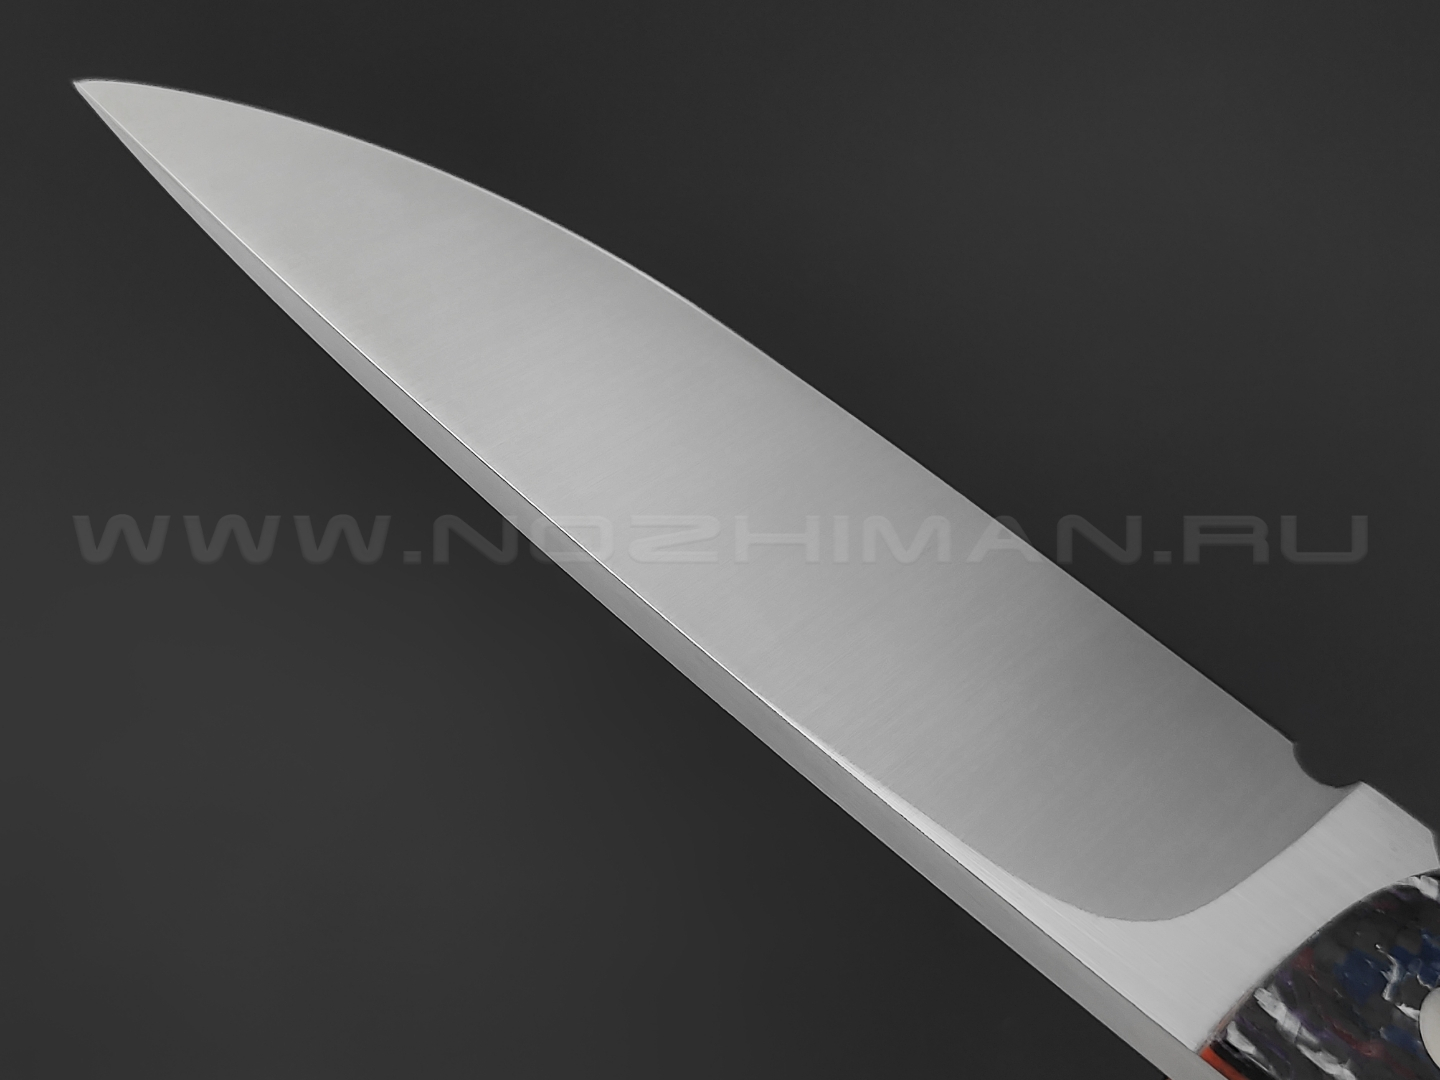 Нож Burlax BX0076 сталь M398, рукоять Carbon fiber Colors